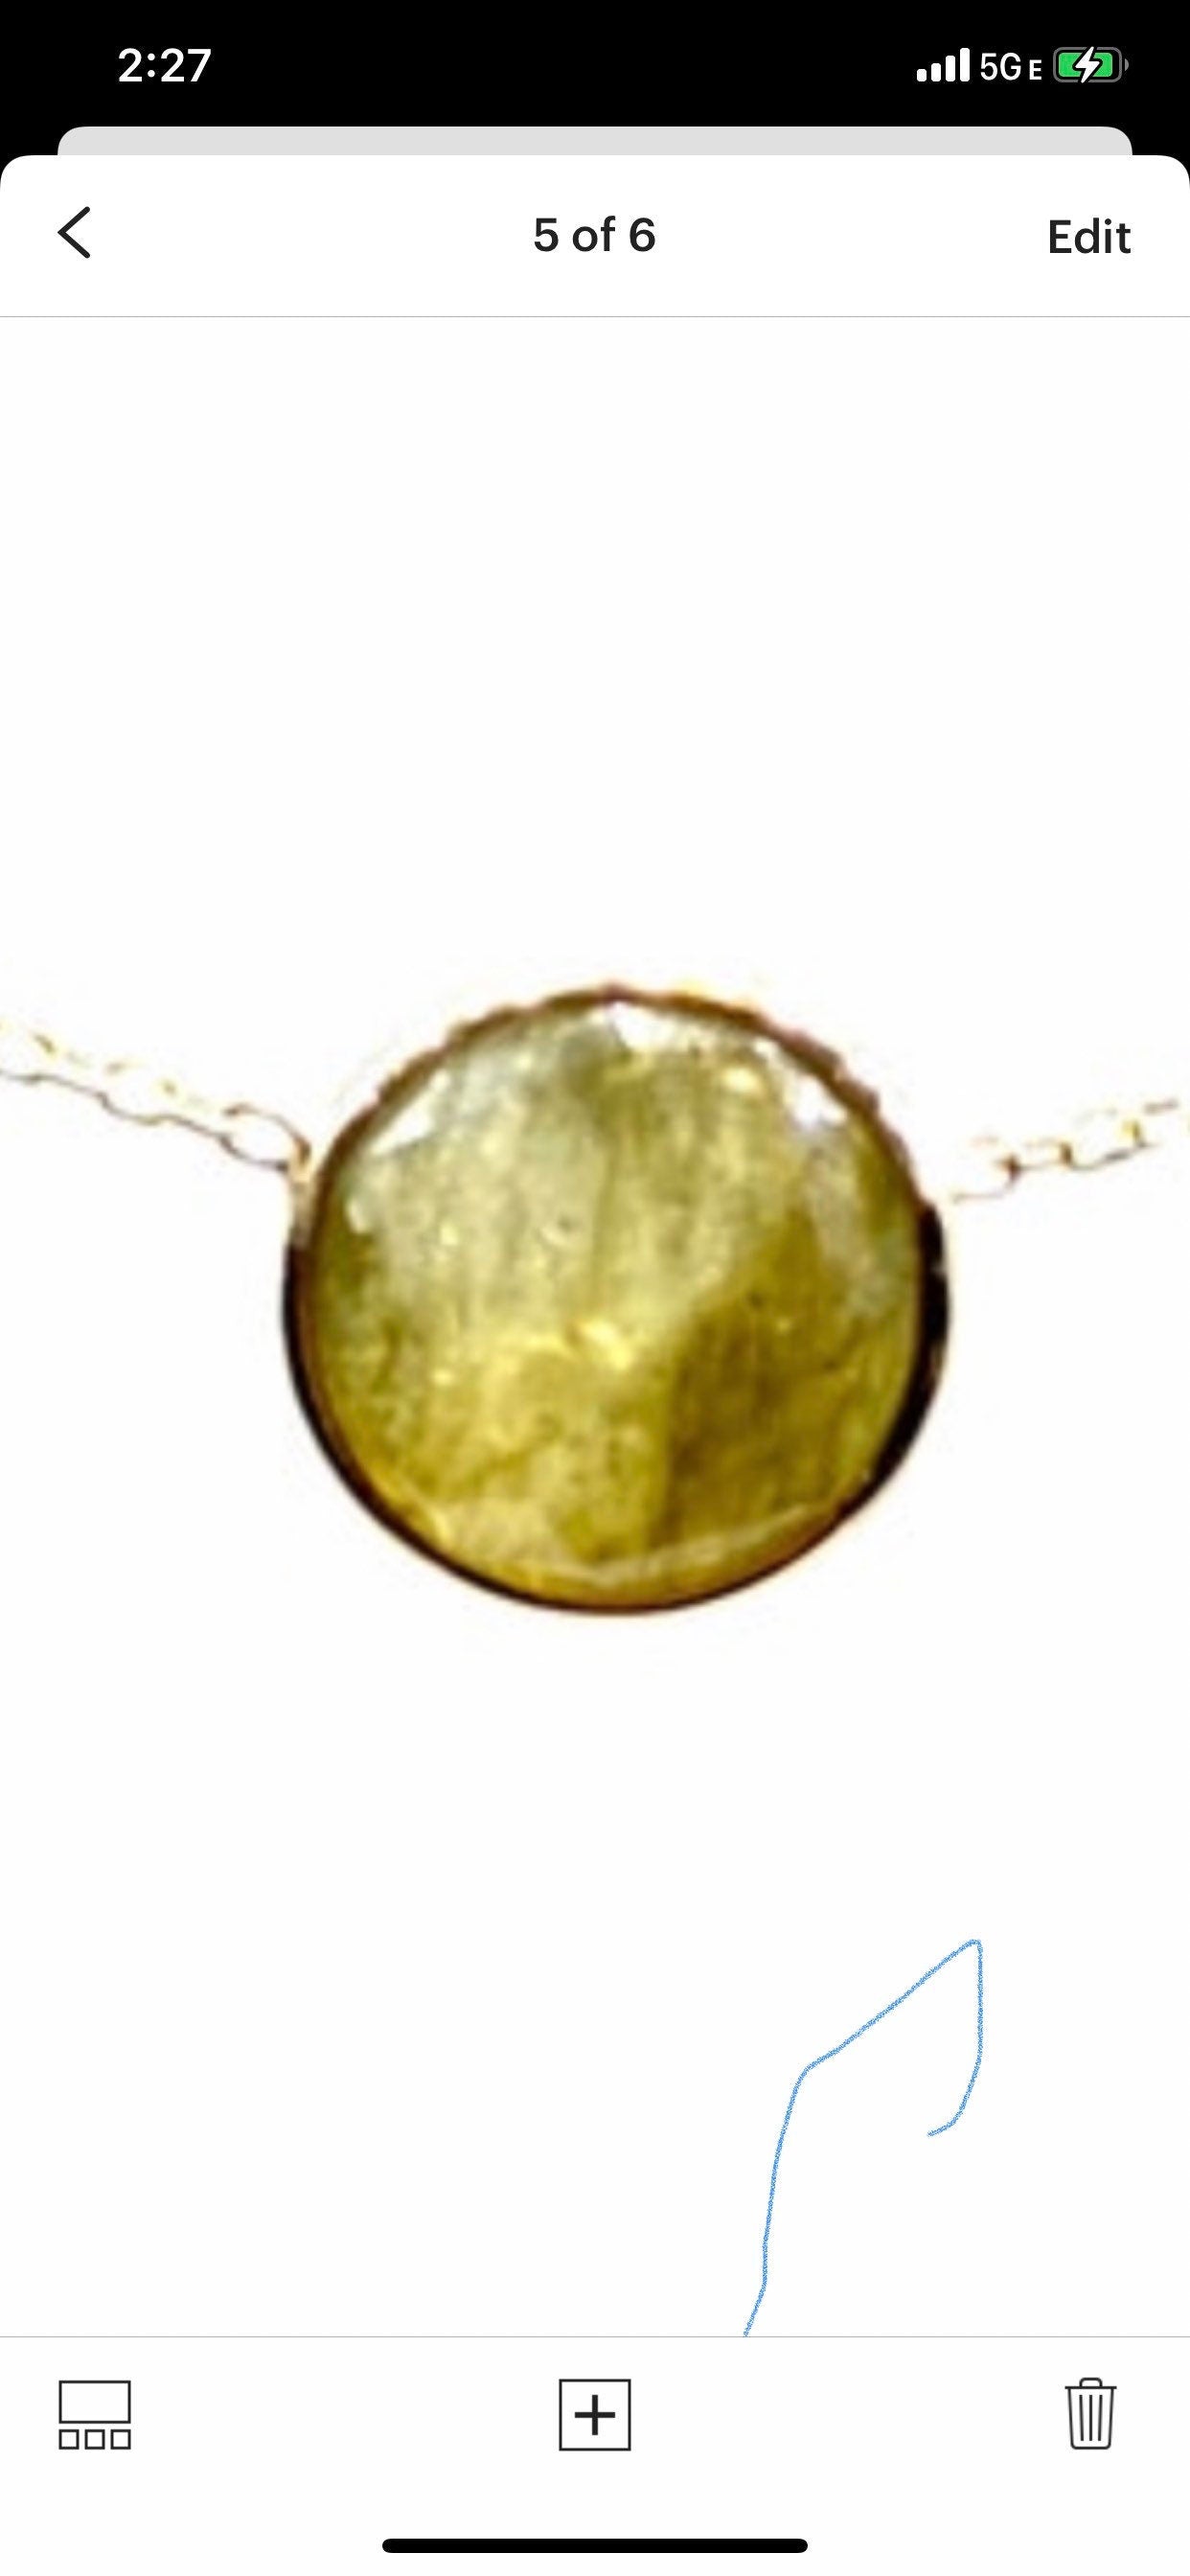 Yellow Gold Round Cut Labradorite Bezel Chain Adjustable Necklace